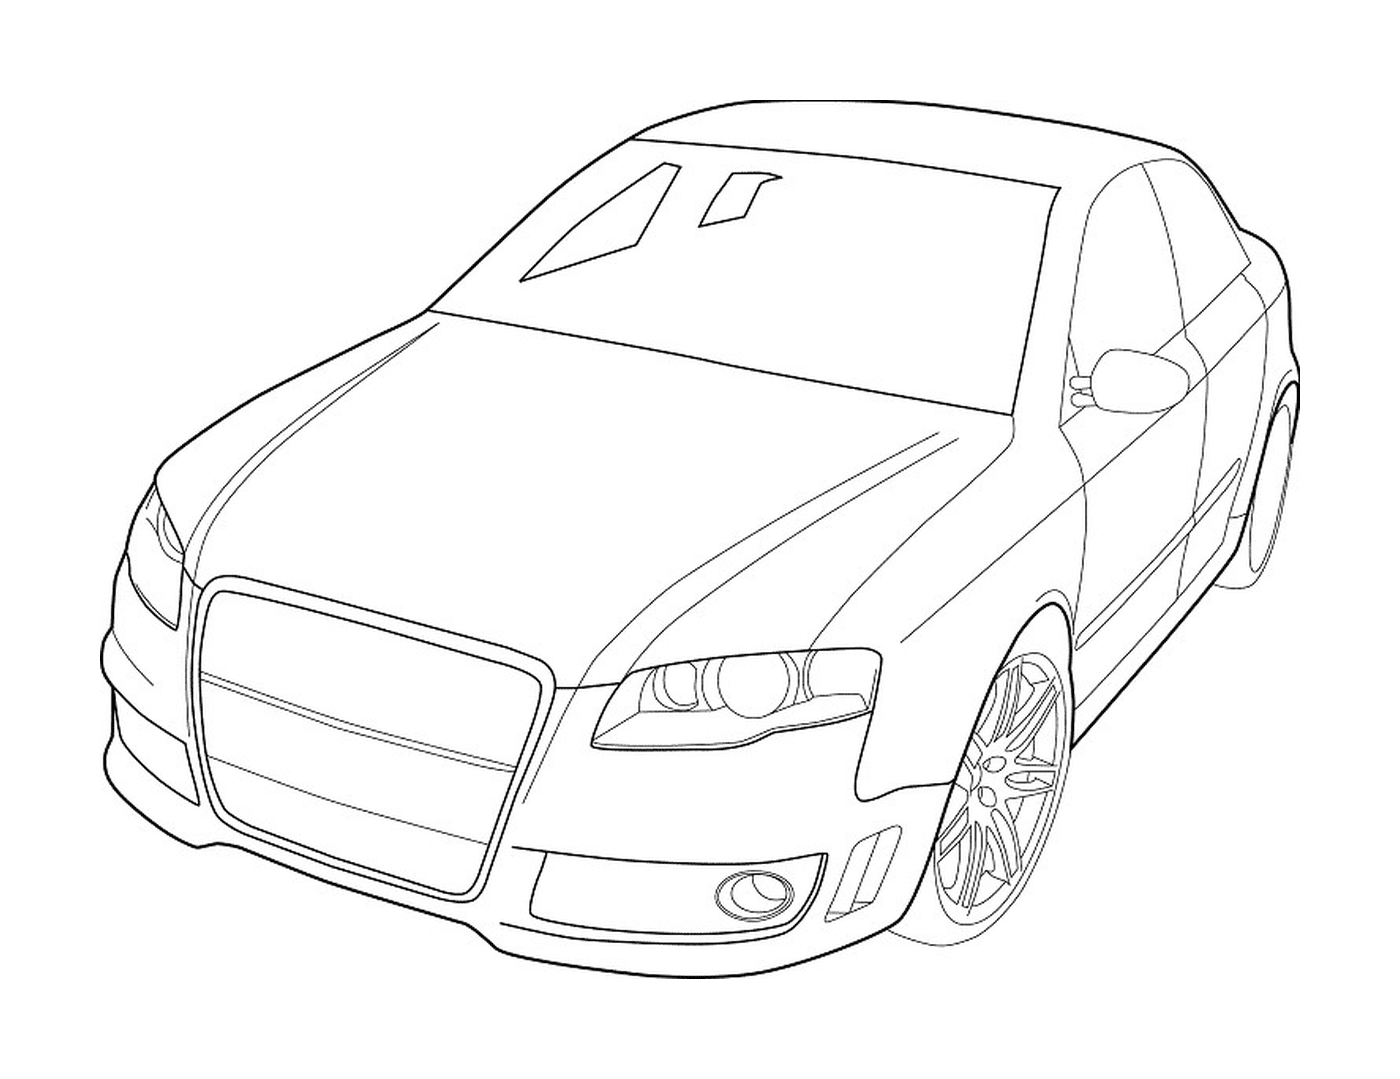  Fahrzeug Audi entworfen 